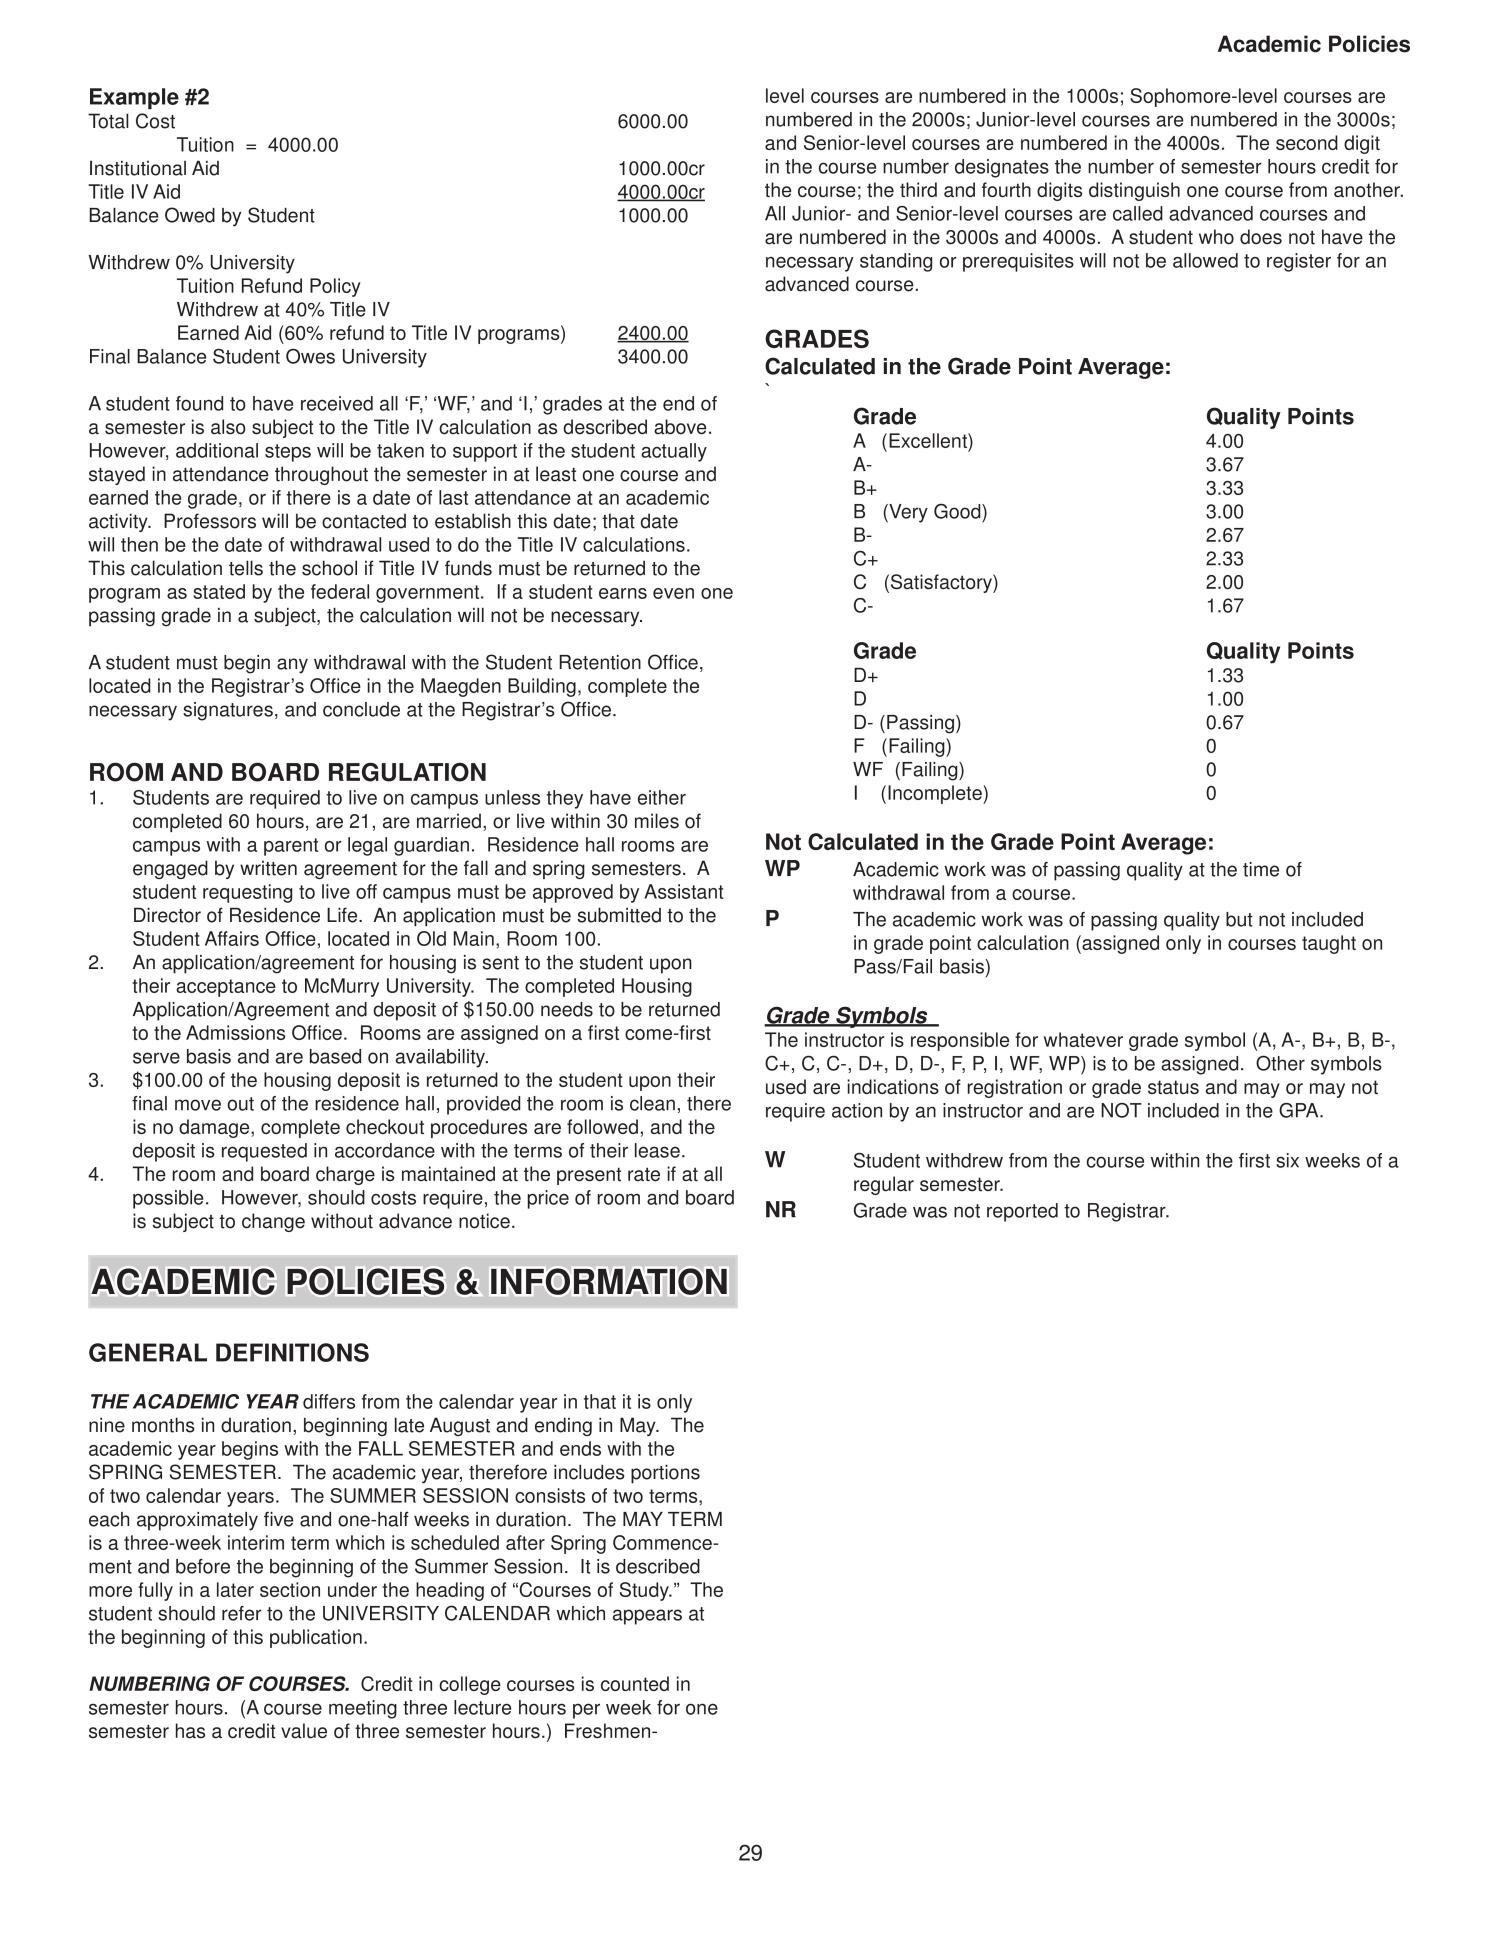 Bulletin of McMurry University, 2010-2011
                                                
                                                    29
                                                